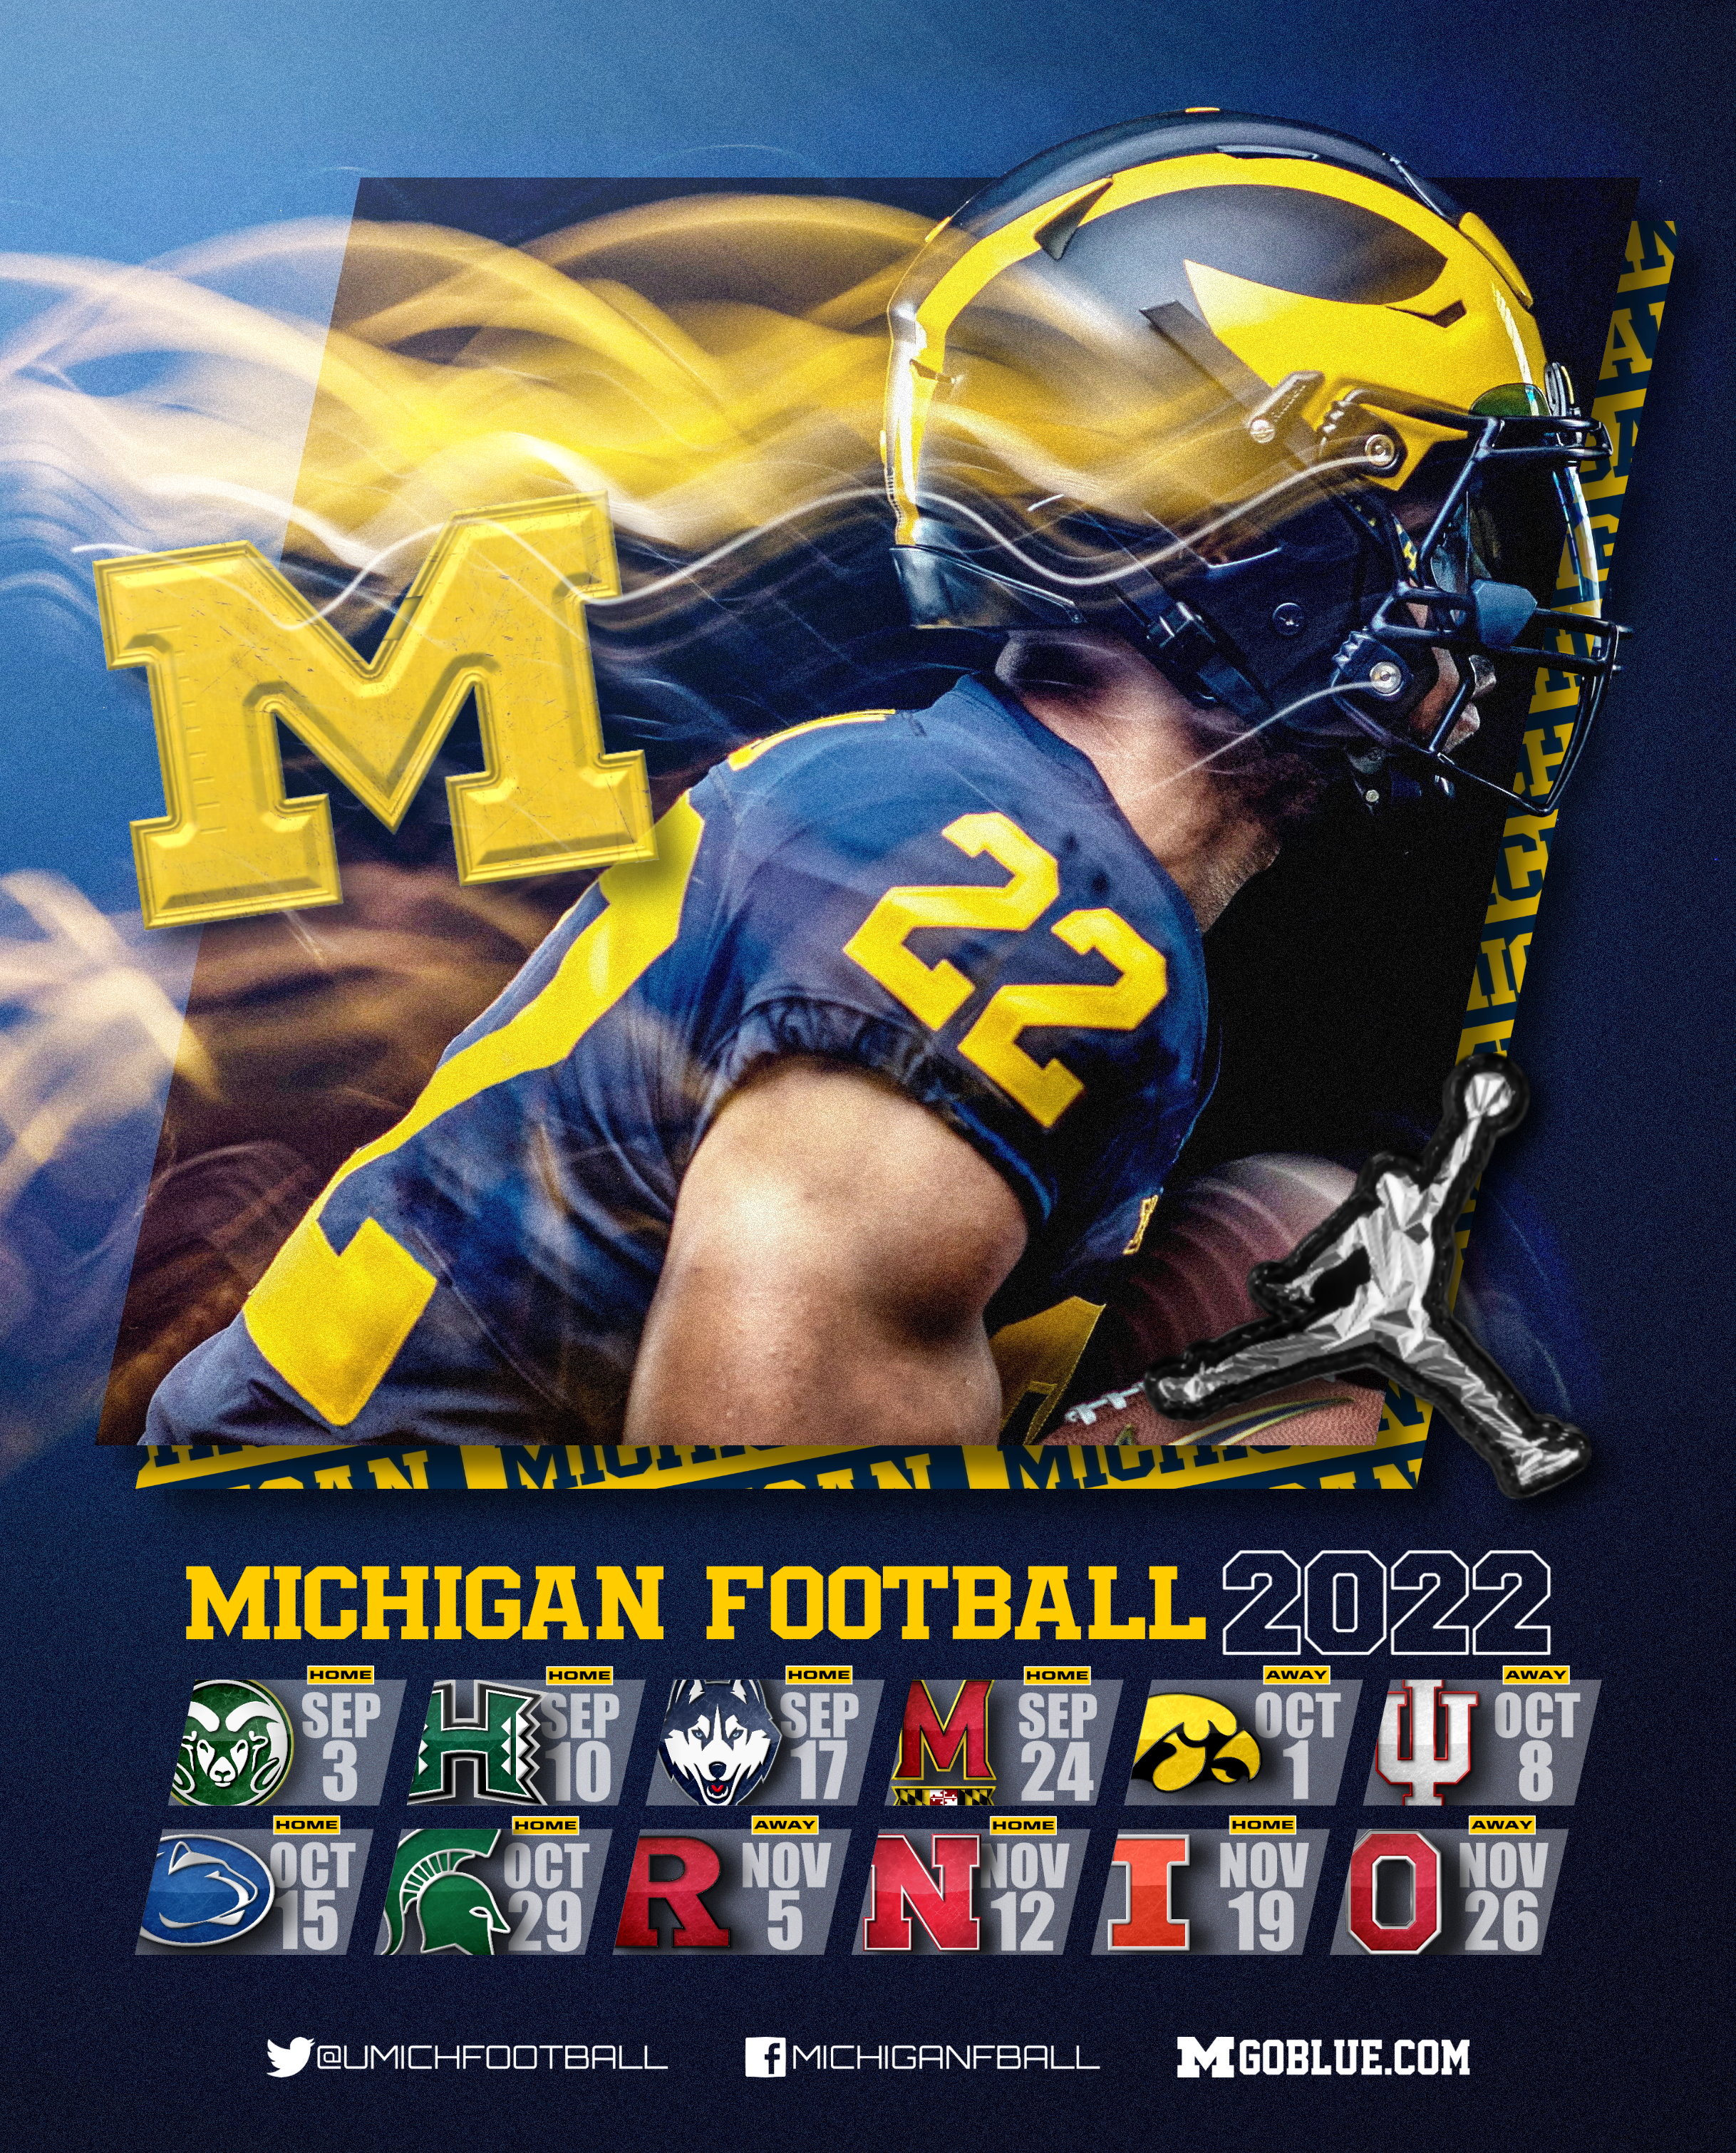 Michigan 2022 Schedule Michigan Football On Twitter: "𝐓𝐡𝐞 𝐌𝐢𝐜𝐡𝐢𝐠𝐚𝐧 𝐅𝐨𝐨𝐭𝐛𝐚𝐥𝐥 𝟐𝟎𝟐𝟐  𝐒𝐜𝐡𝐞𝐝𝐮𝐥𝐞! 🗞 Https://T.co/M6Z57Mi9Qh 🎟 Https://T.co/Zp7N31Szdy  #Goblue Https://T.co/Bab5Dwgoqv" / Twitter